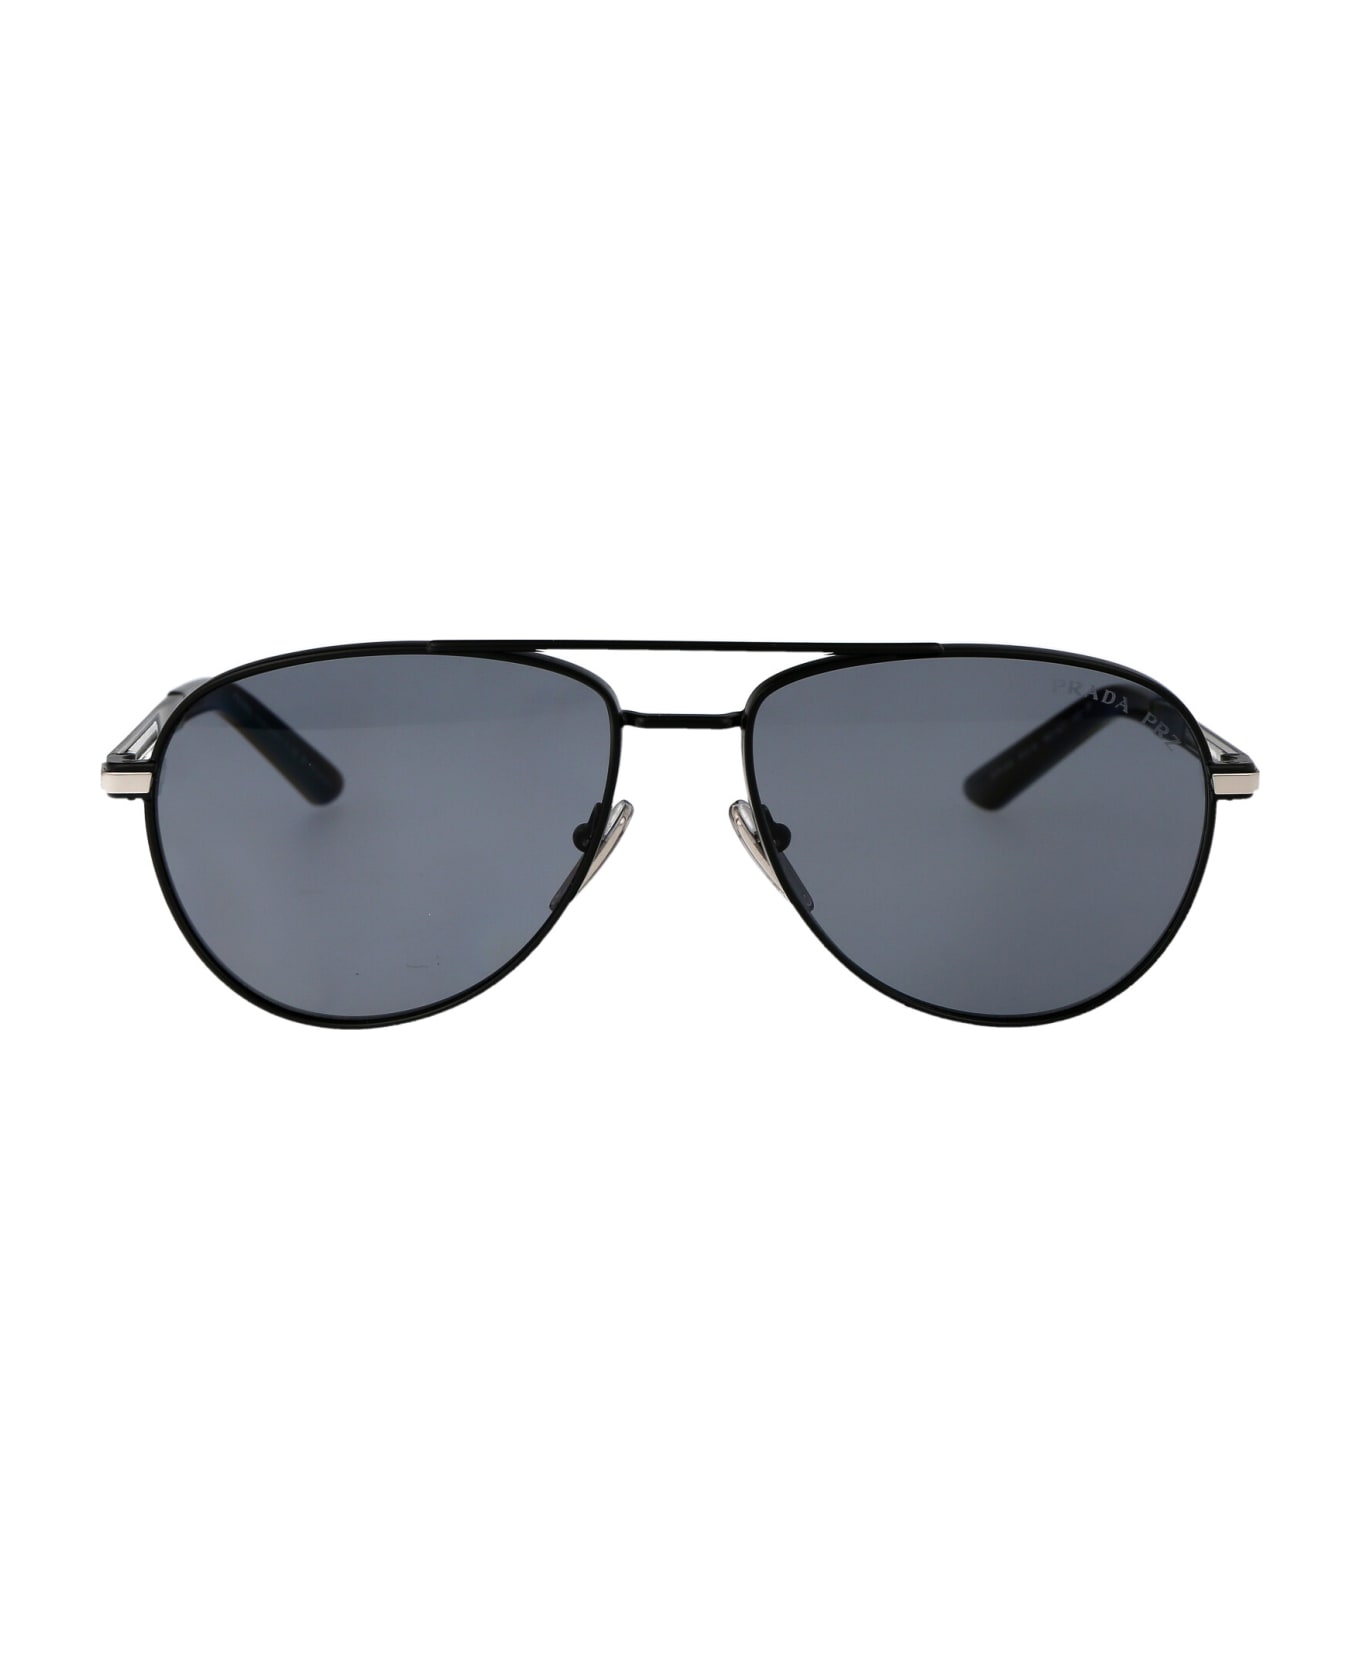 Prada Eyewear 0pr A54s Sunglasses - 1BO5Z1 MATTE BLACK